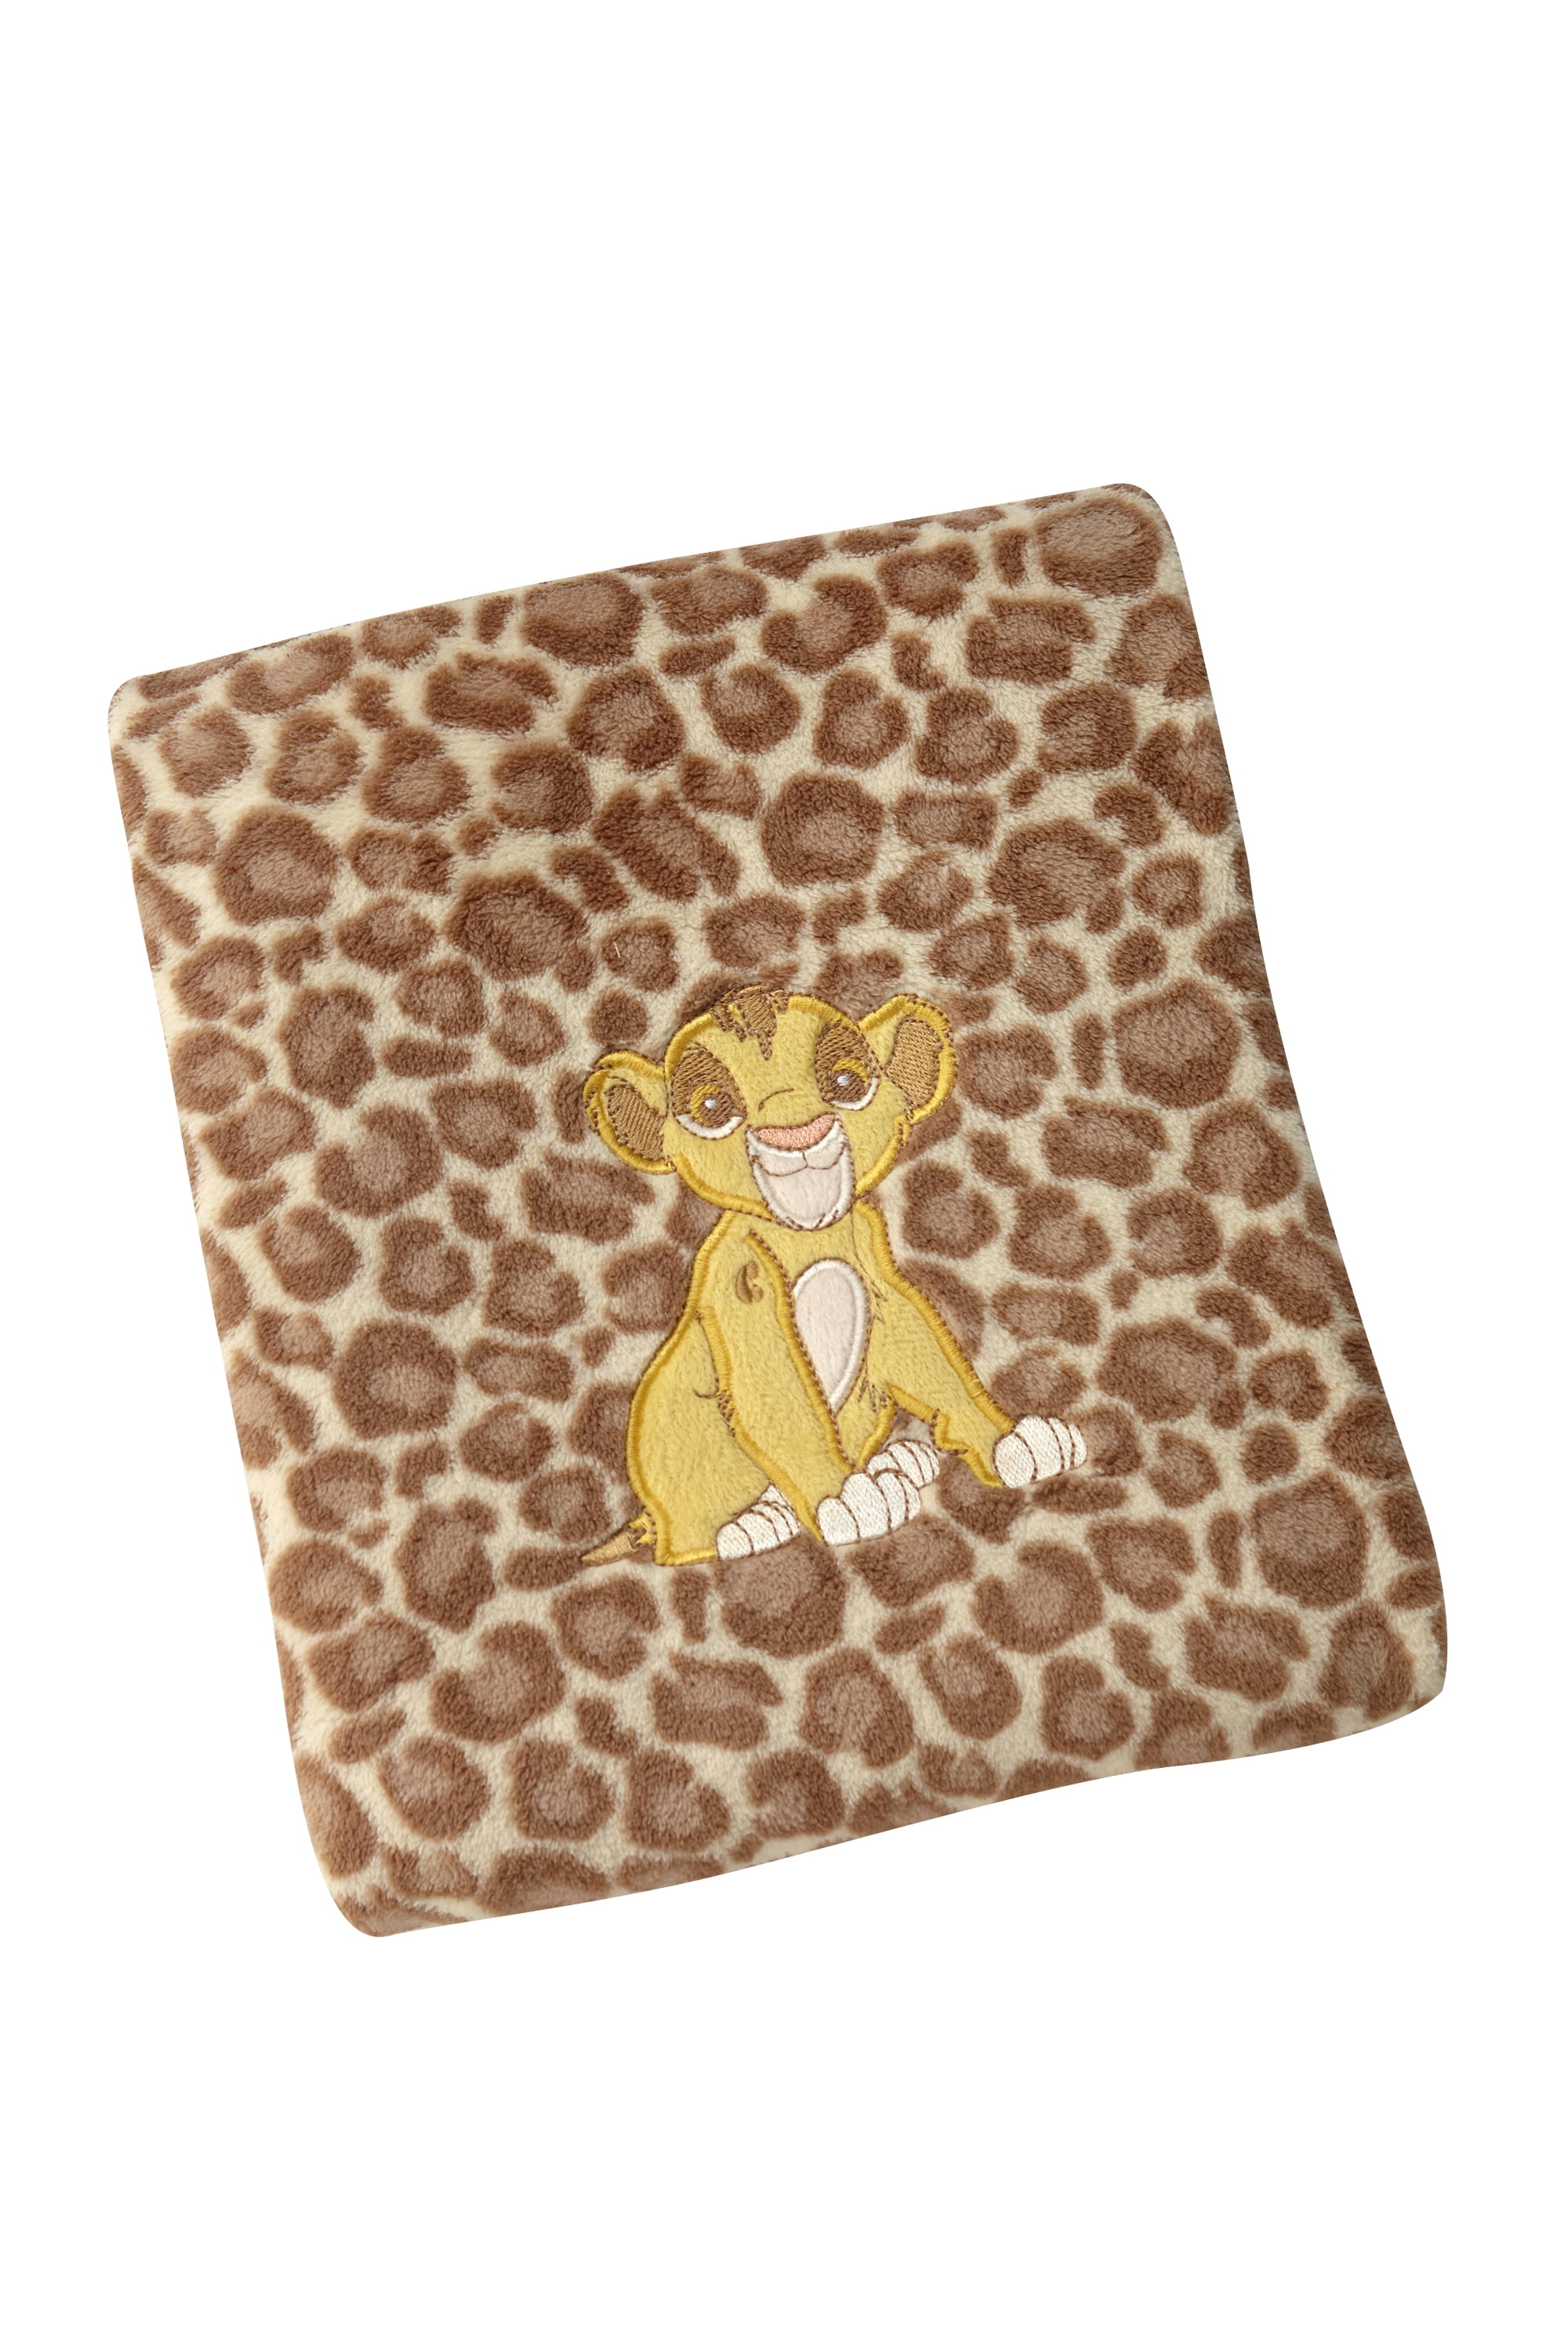 Disney Lion King Simbas Wild Adventure Appliqued Diaper Stacker Brown Tan Ivory Sage 